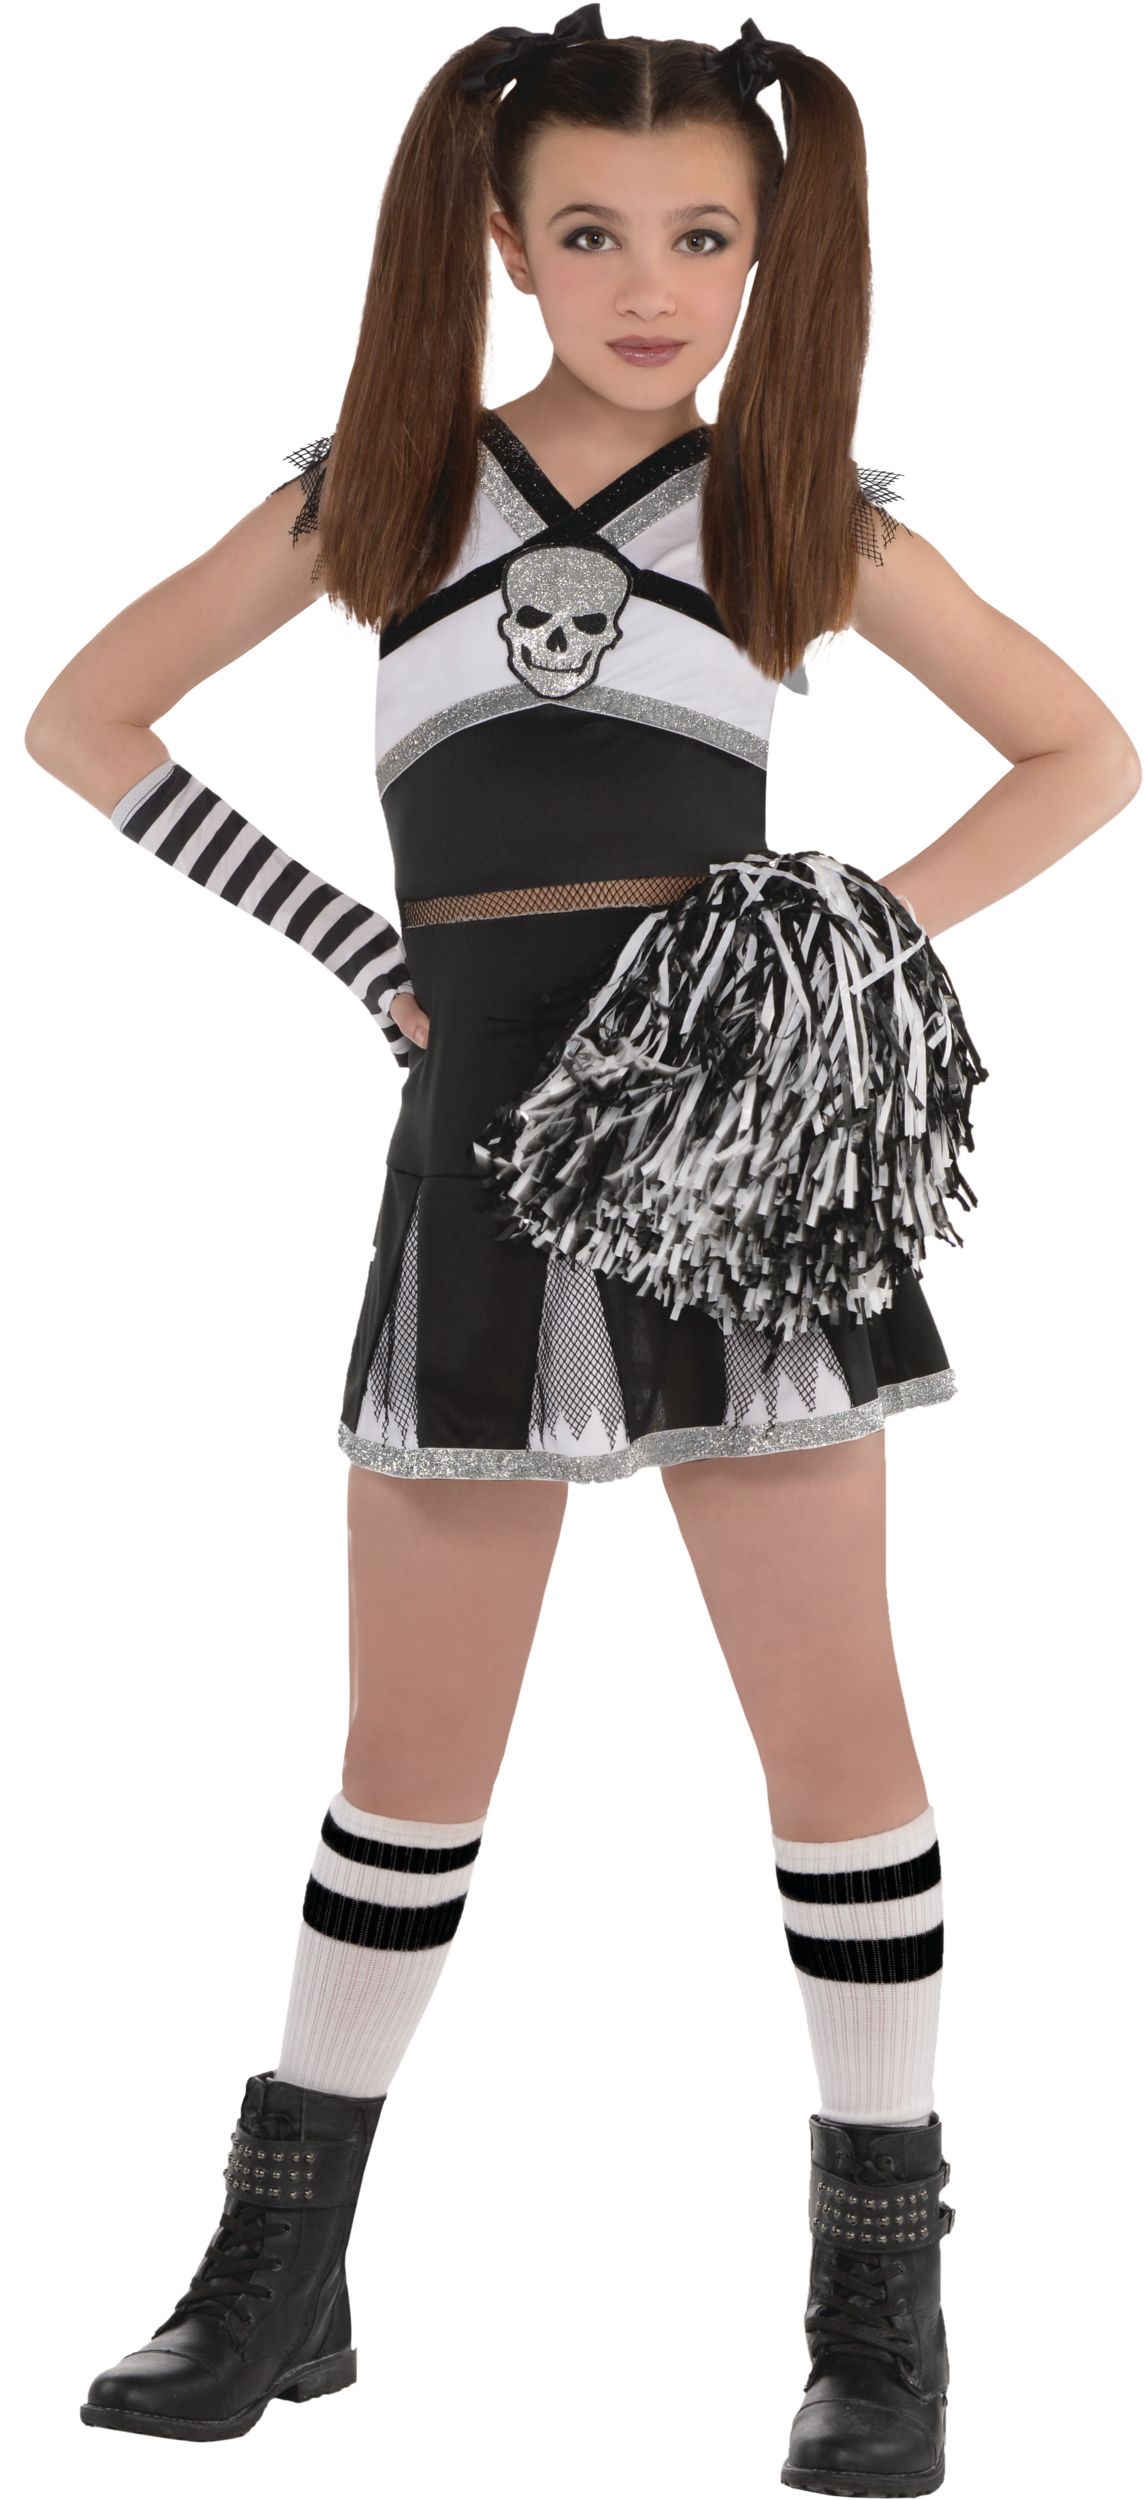 Kids' Cheerleader Black/White Dress with Socks Halloween Costume